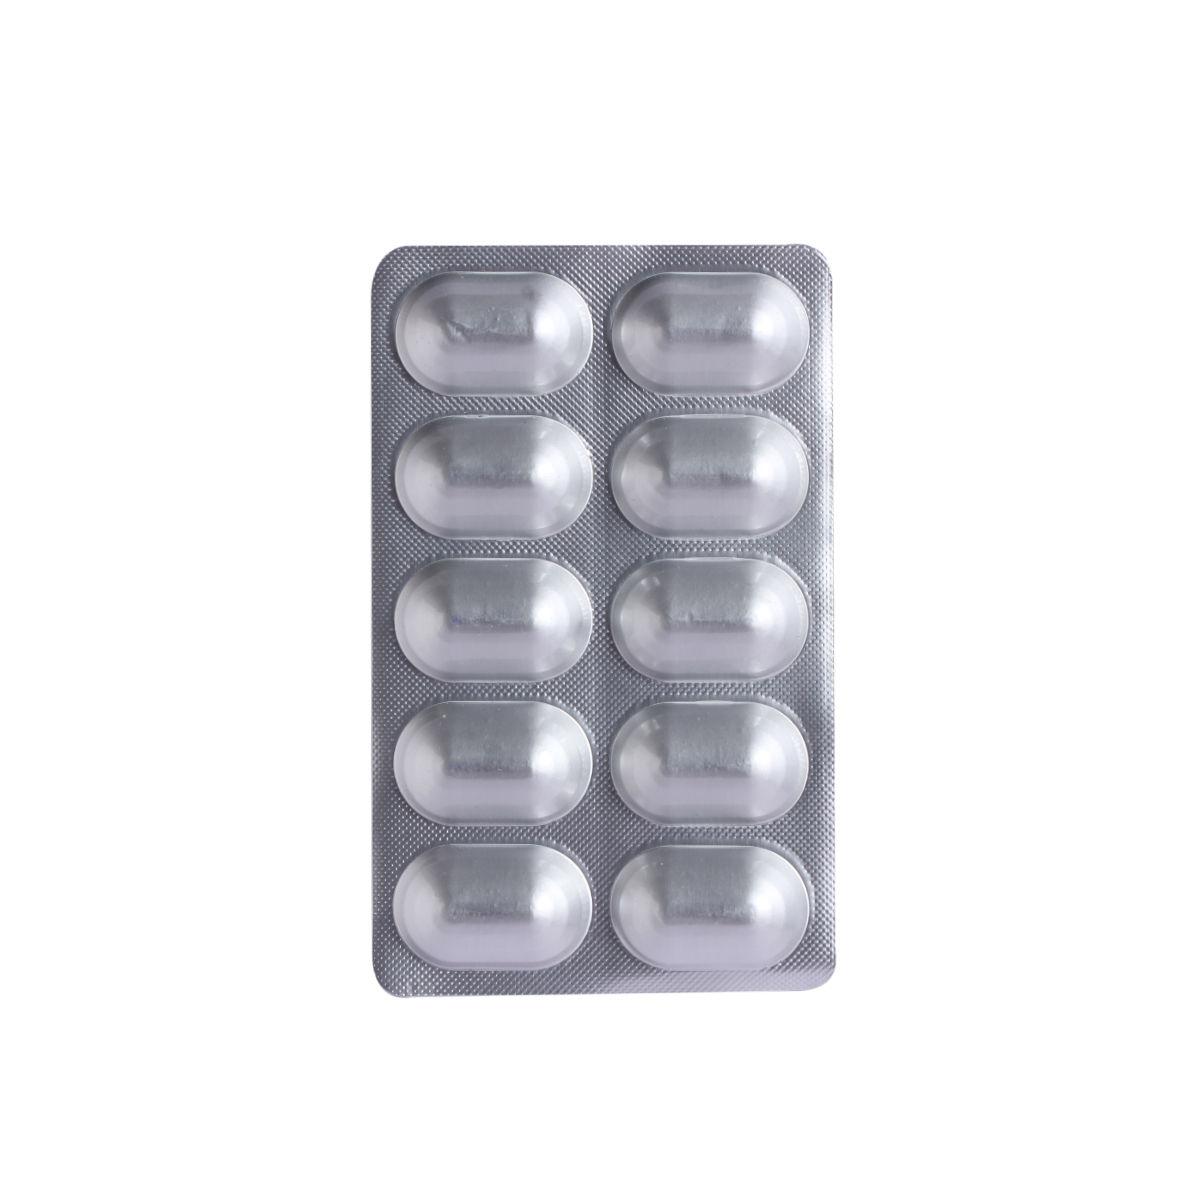 Irodol-Sp Tablet 10's, Pack of 10 TABLETS